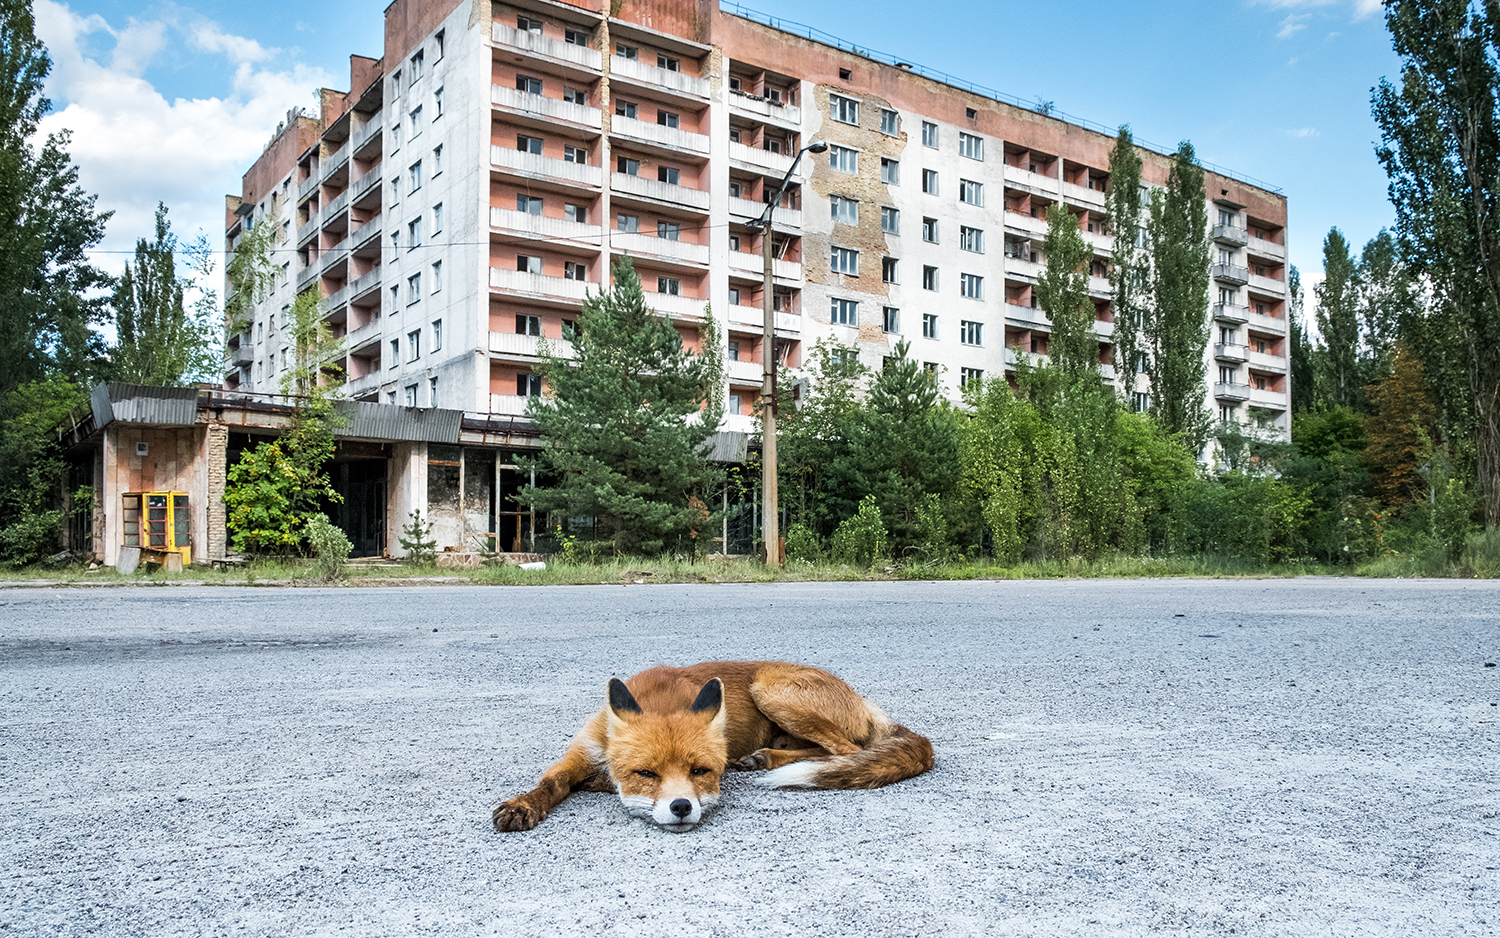 Is It Safe to Visit Chernobyl? | Live Science